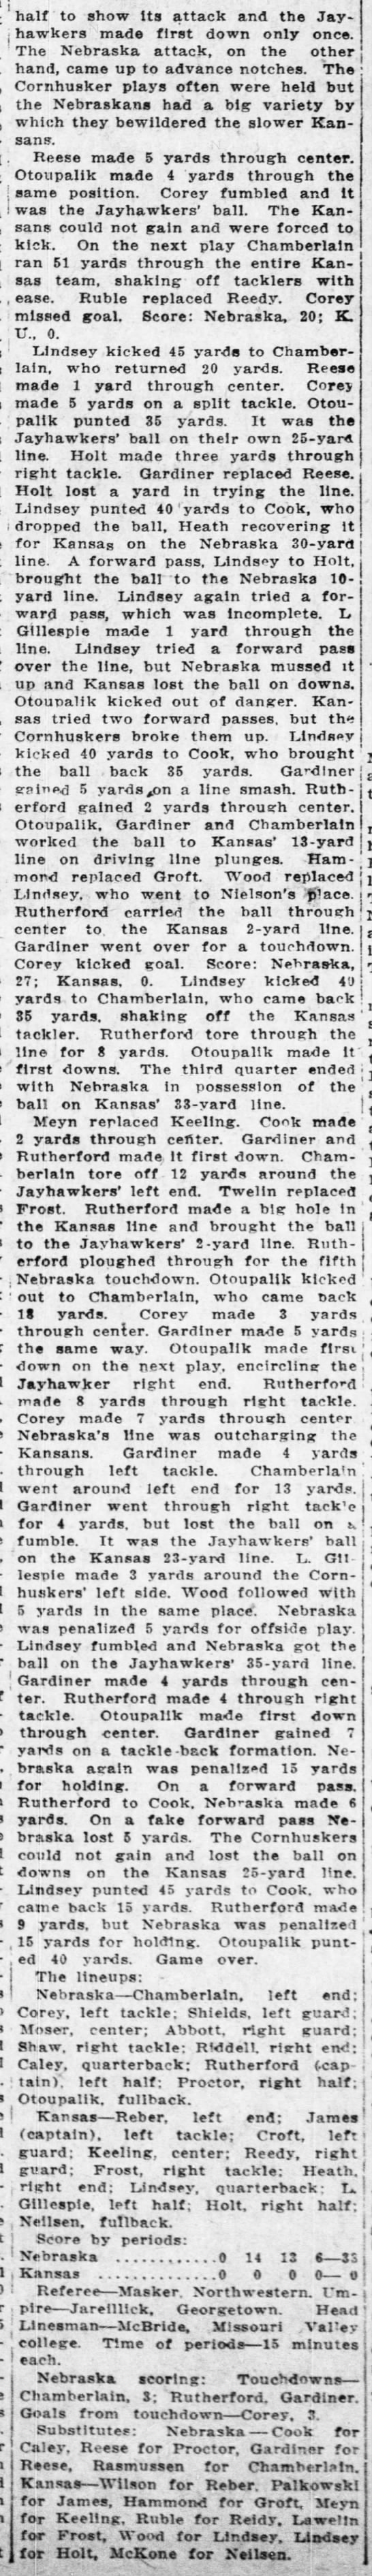 1915 Nebraska-Kansas football, Wichita Eagle, part 2 - 